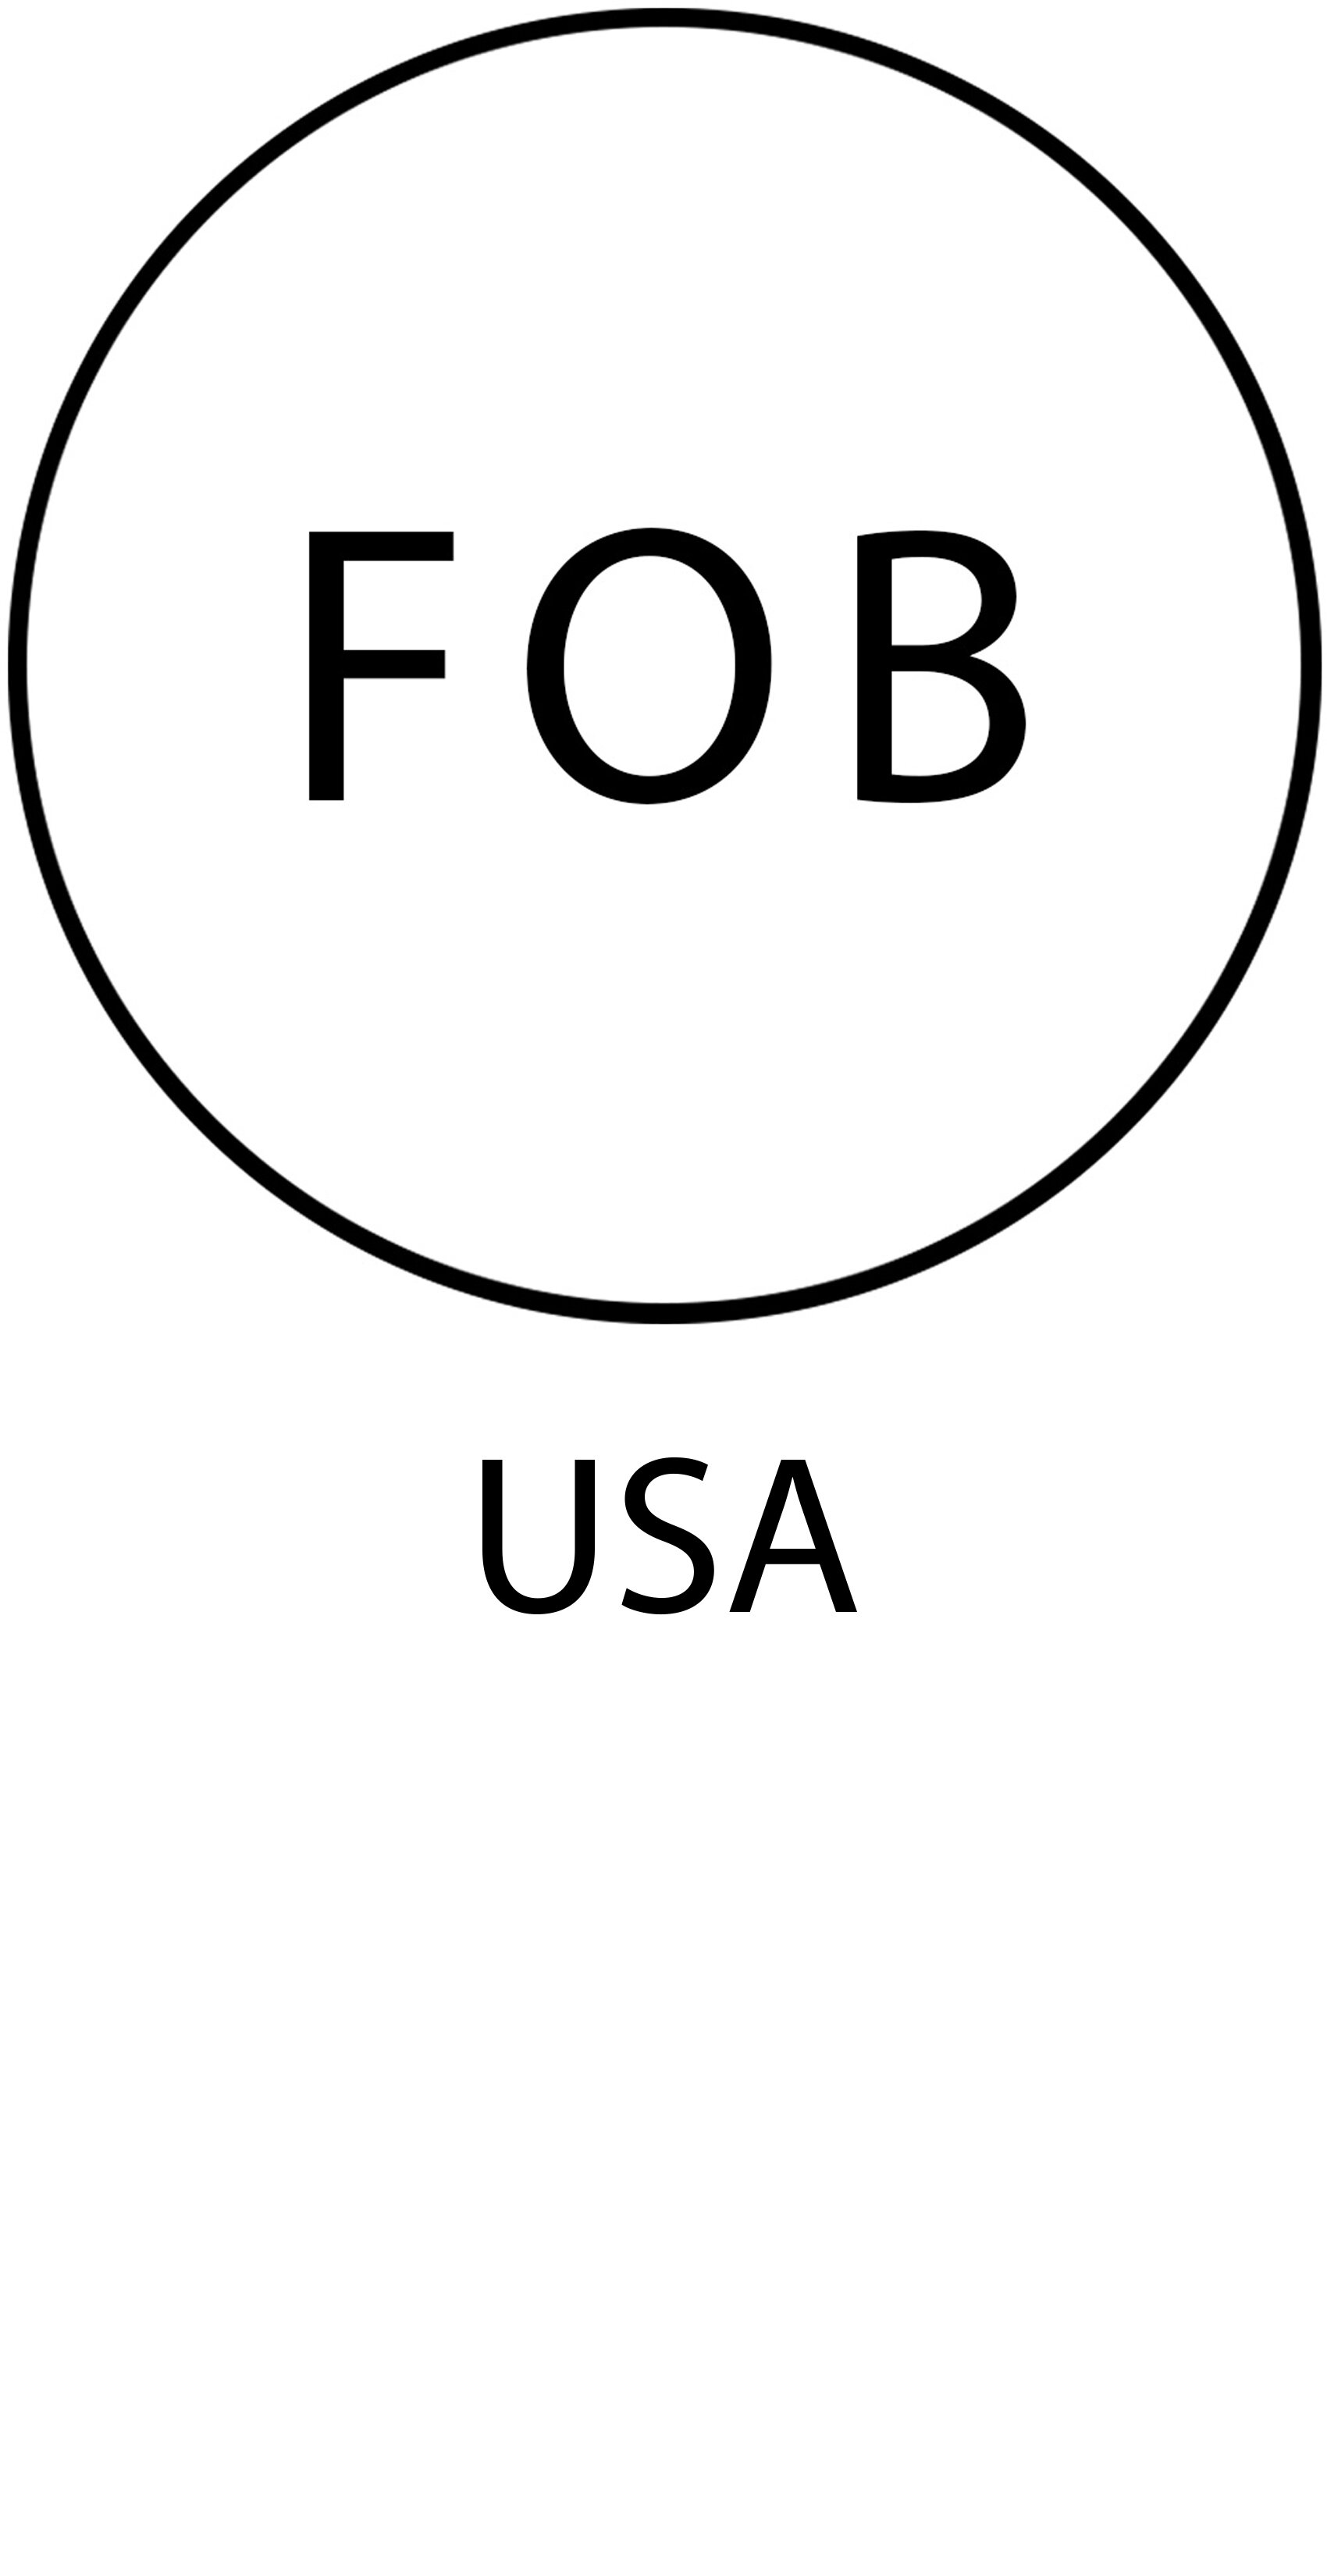 06 FOB_USA.jpg